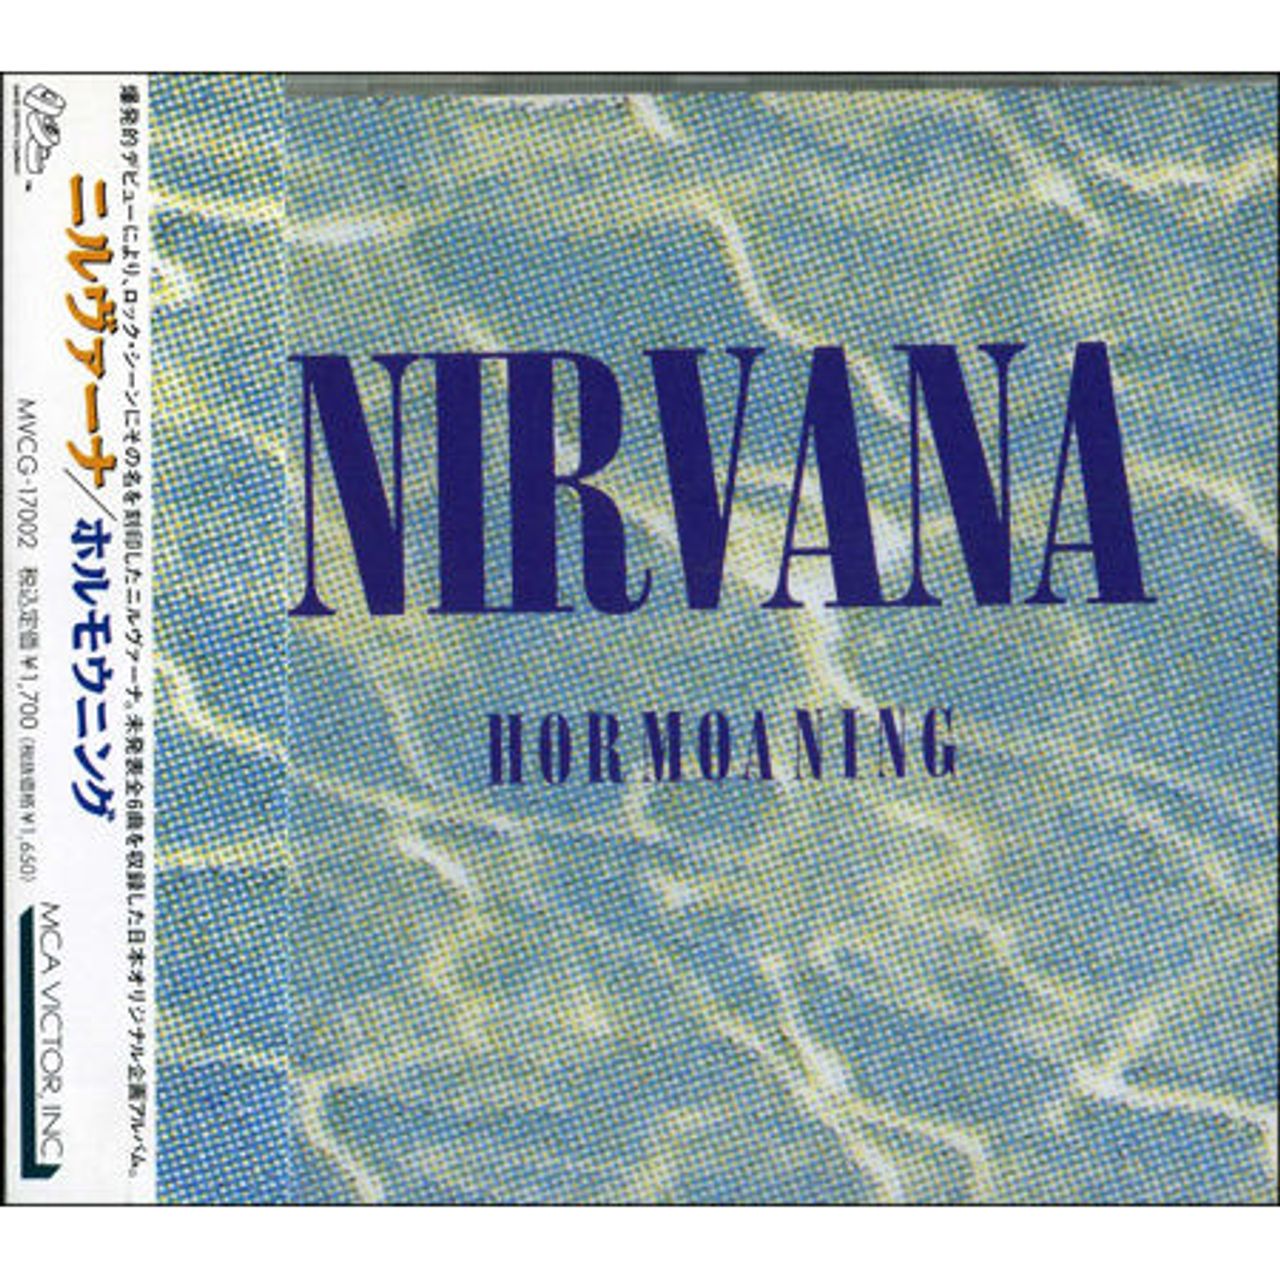 Nirvana (US) Hormoaning - Original Issue Japanese CD album — RareVinyl.com